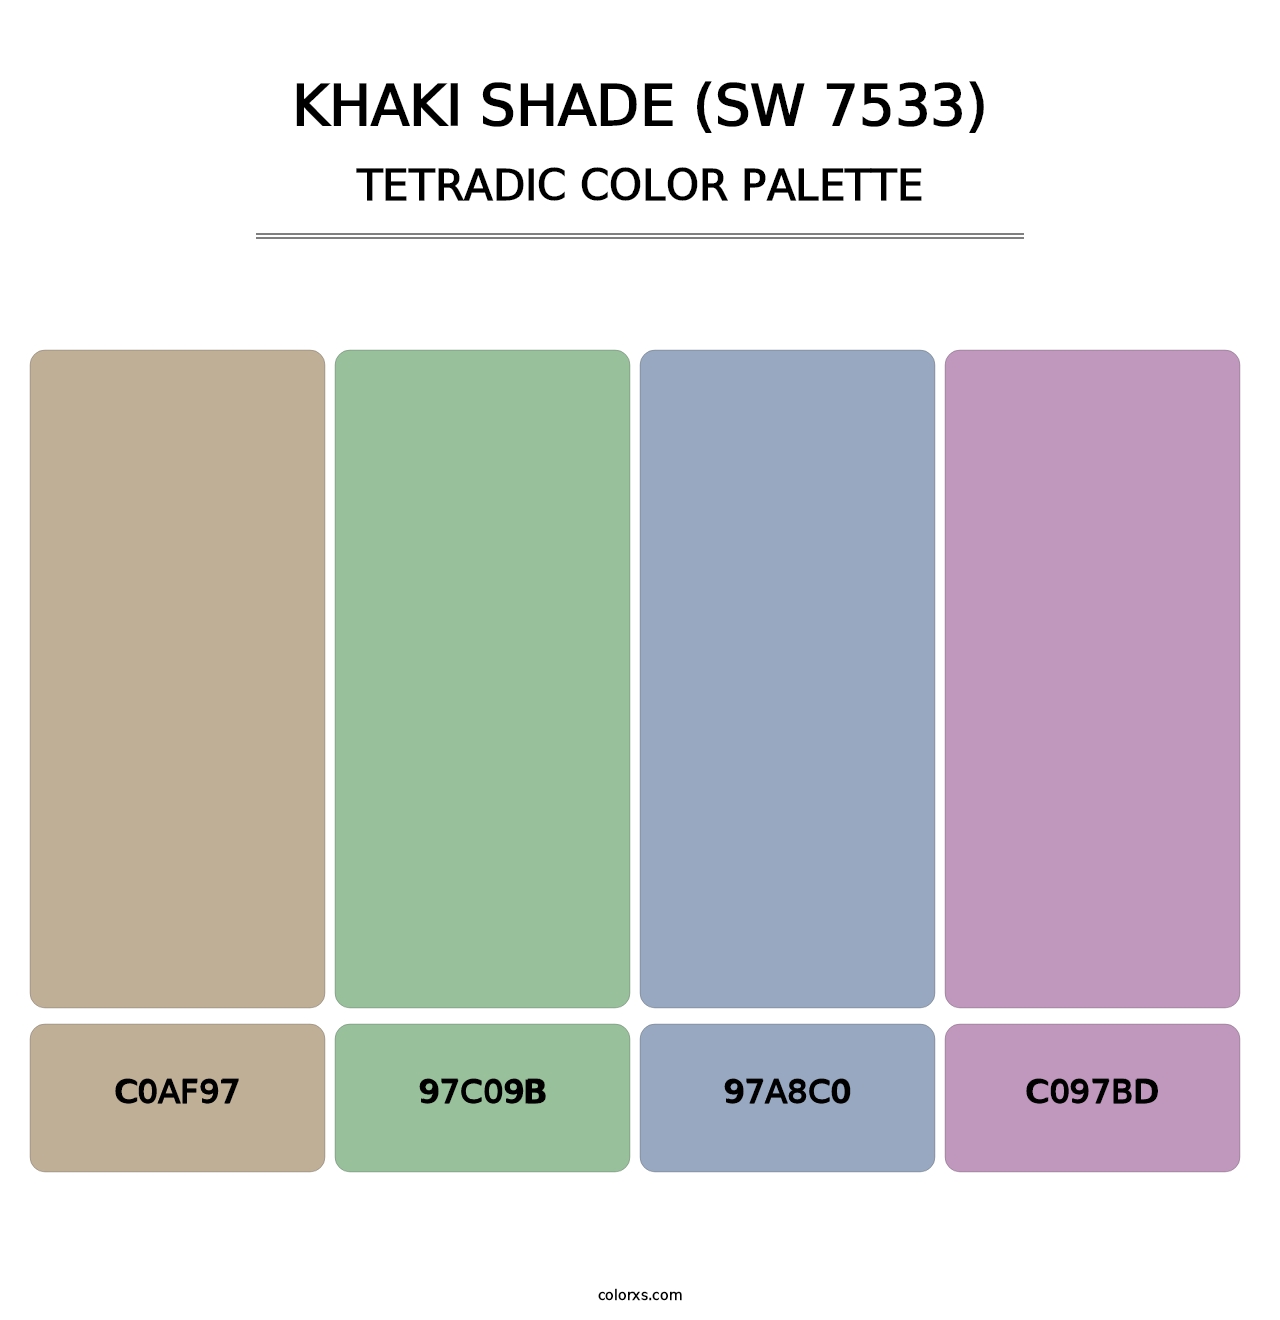 Khaki Shade (SW 7533) - Tetradic Color Palette